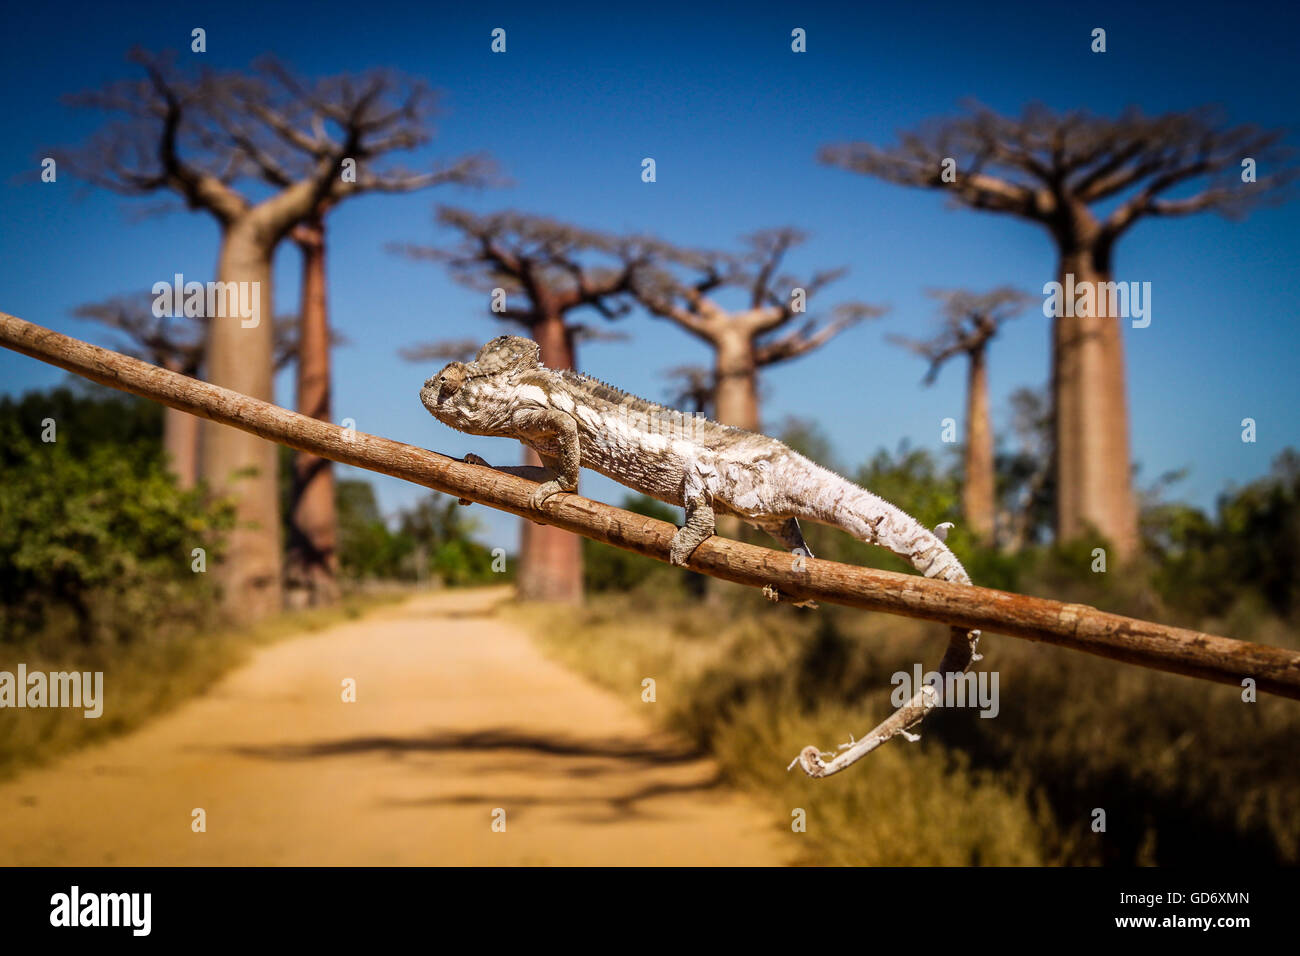 Small chameleon on a branch in Avenida de Baobab Stock Photo